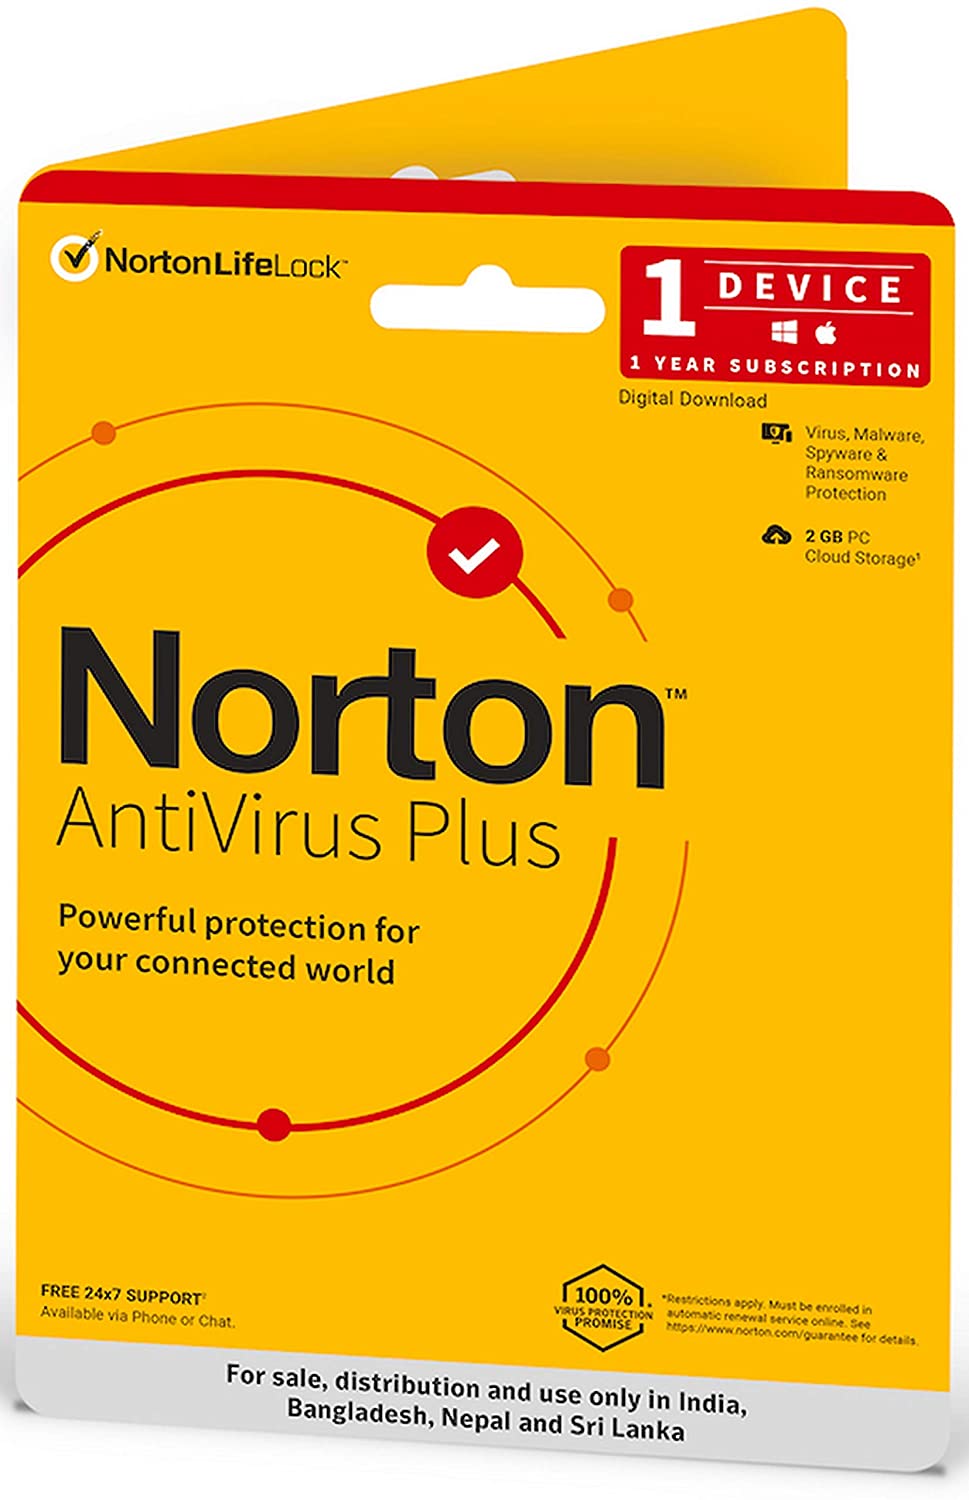 NORTON ANTIVIRUS PLUS PC or Mac 1 Year